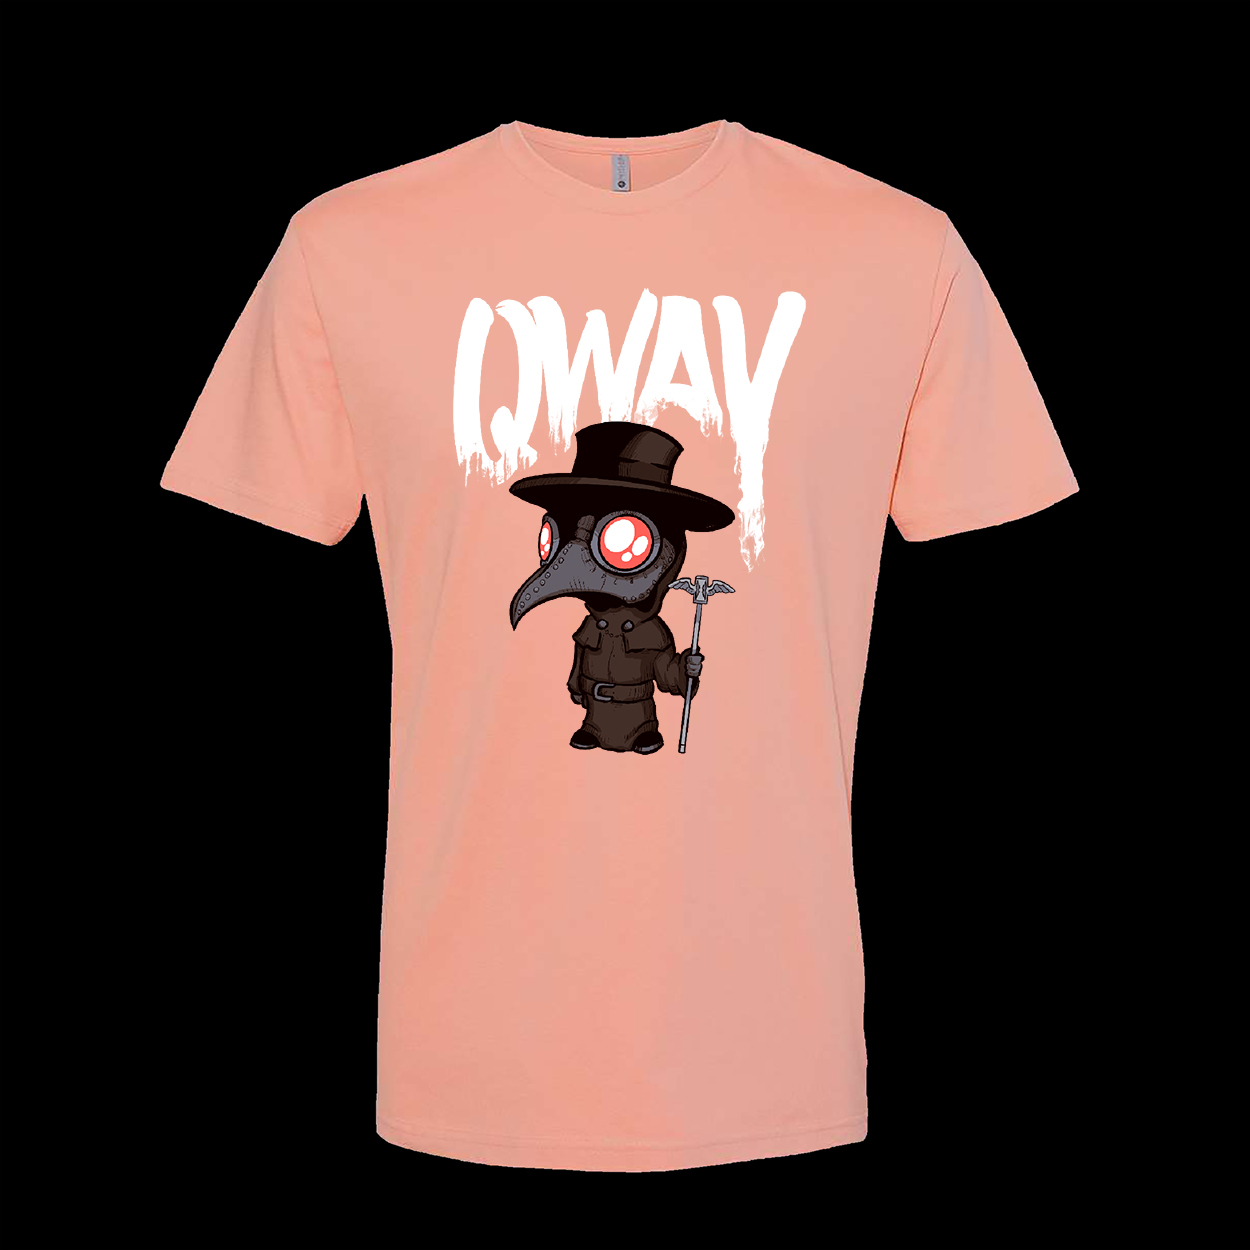 Qway Plague Doctor t-shirt Desert Pink color